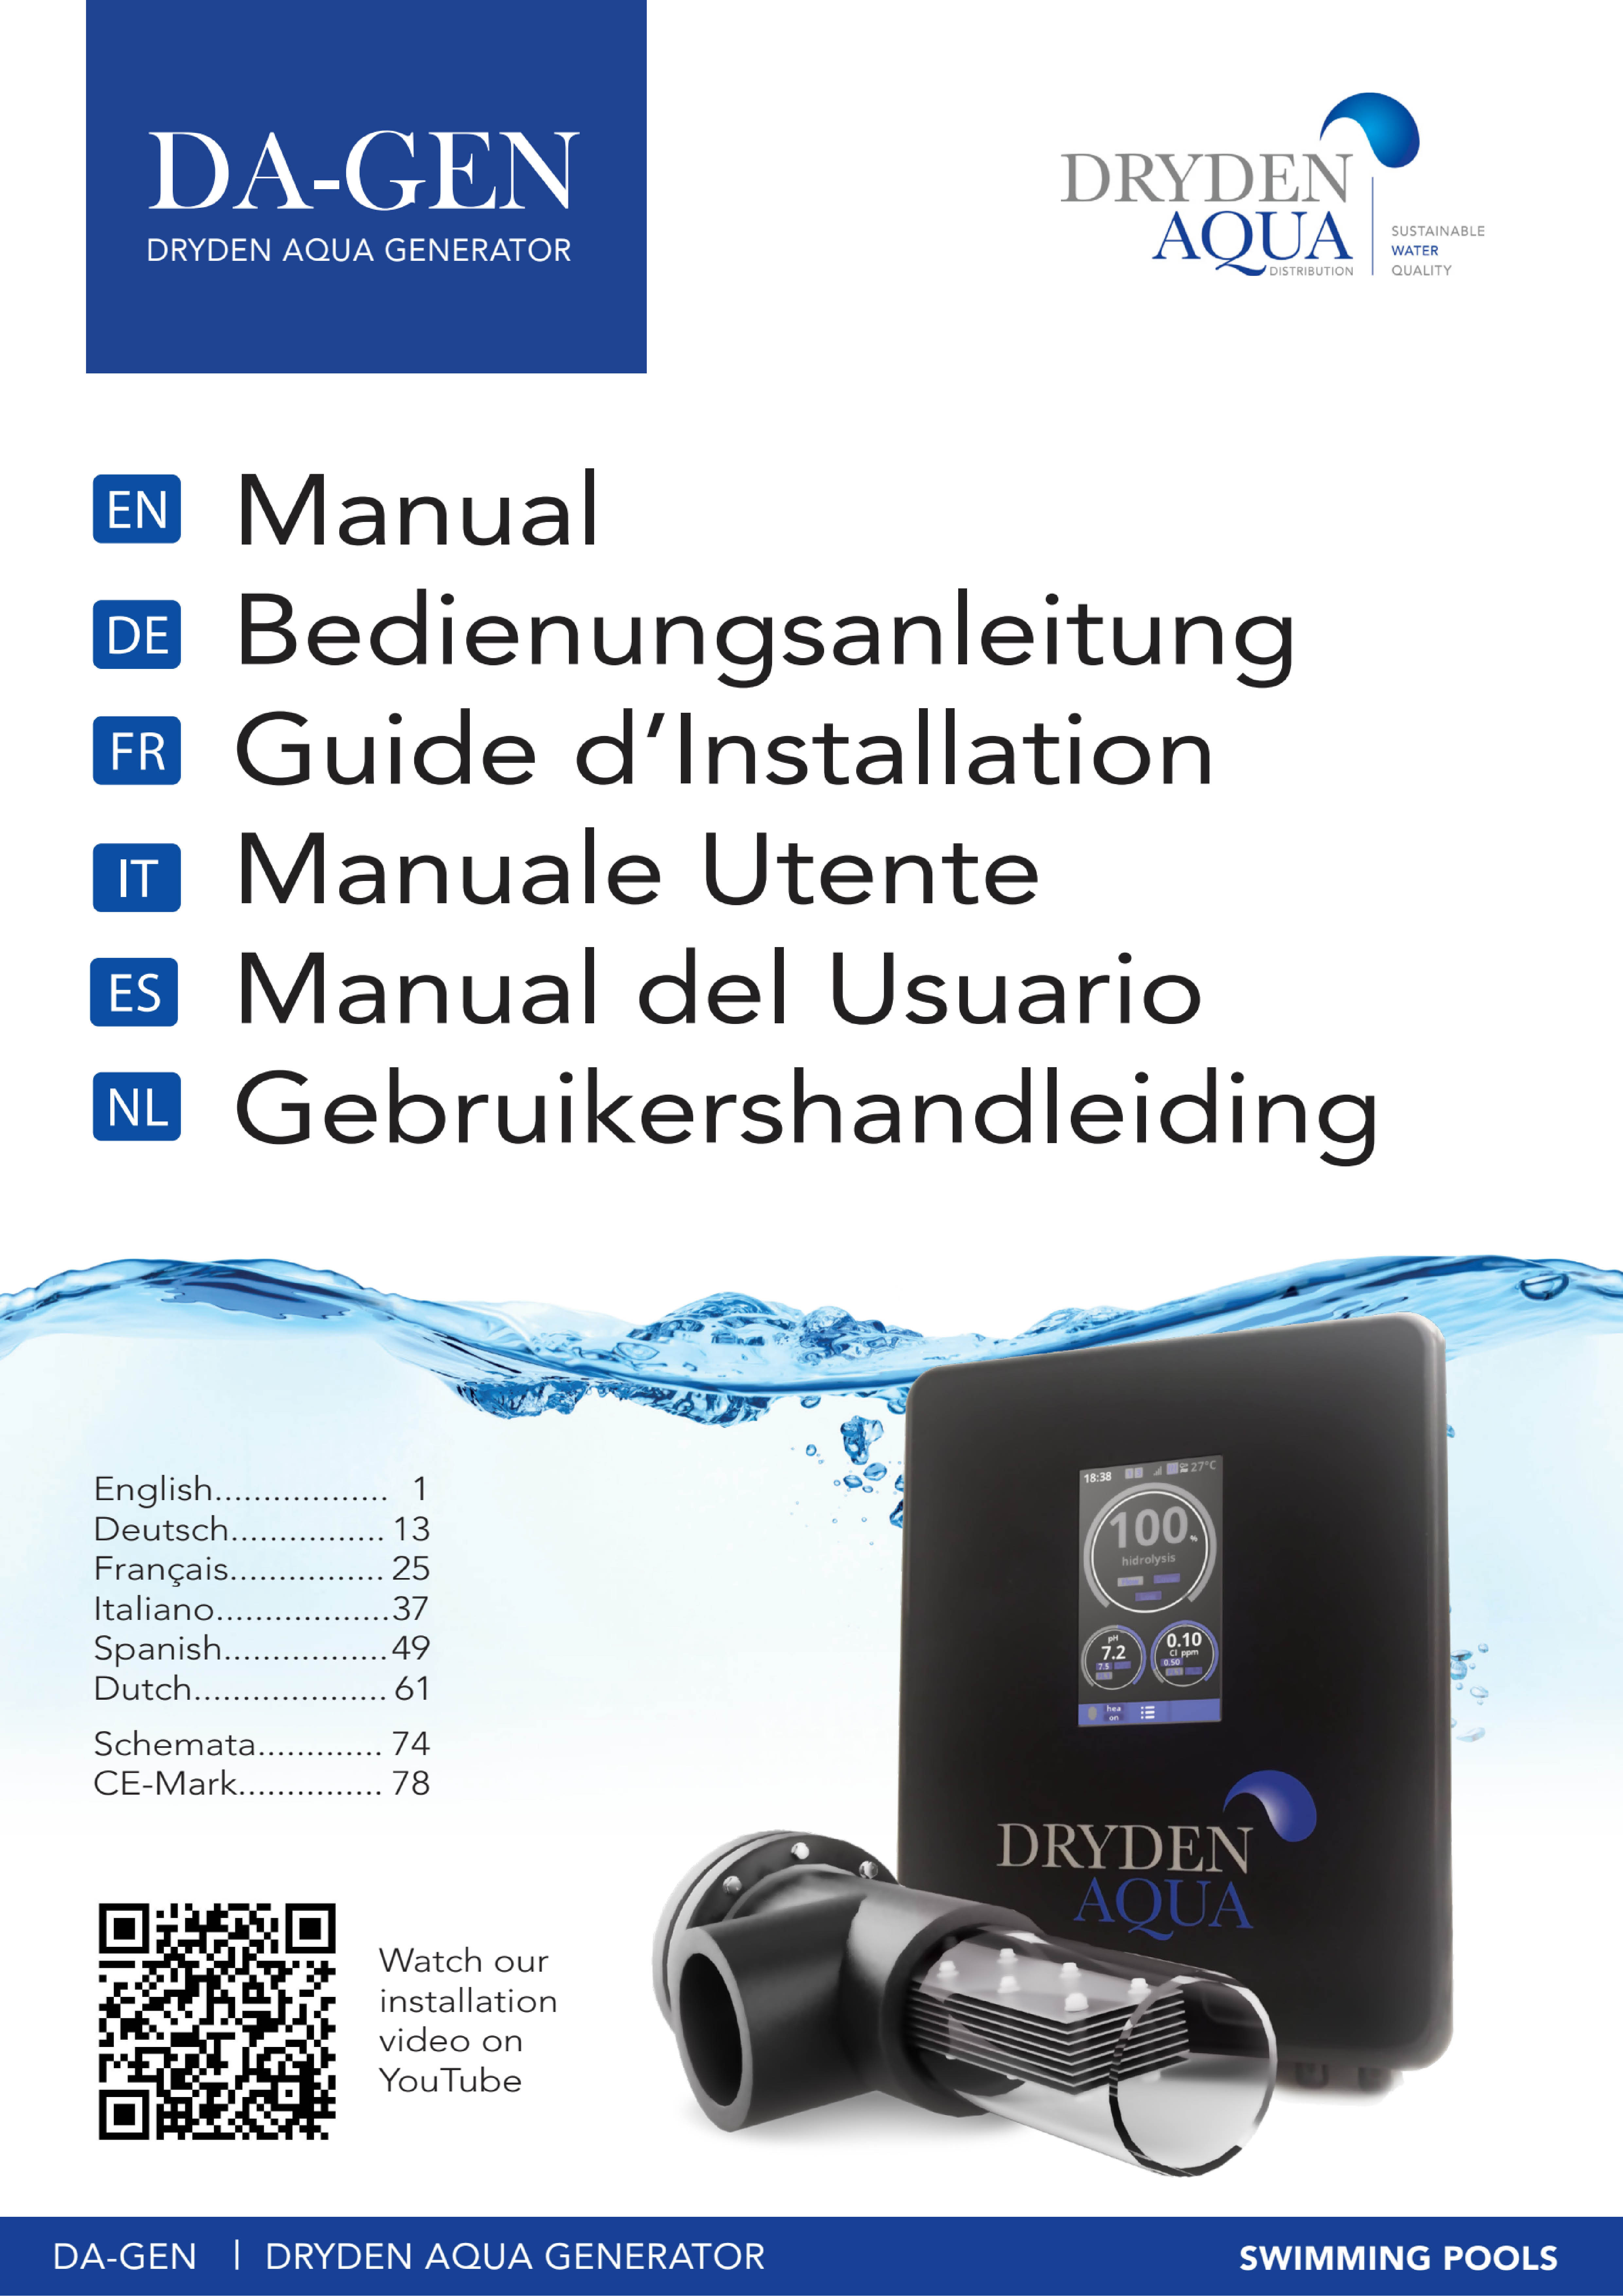 DA-GEN Manual 2020 Complete (multilingual)